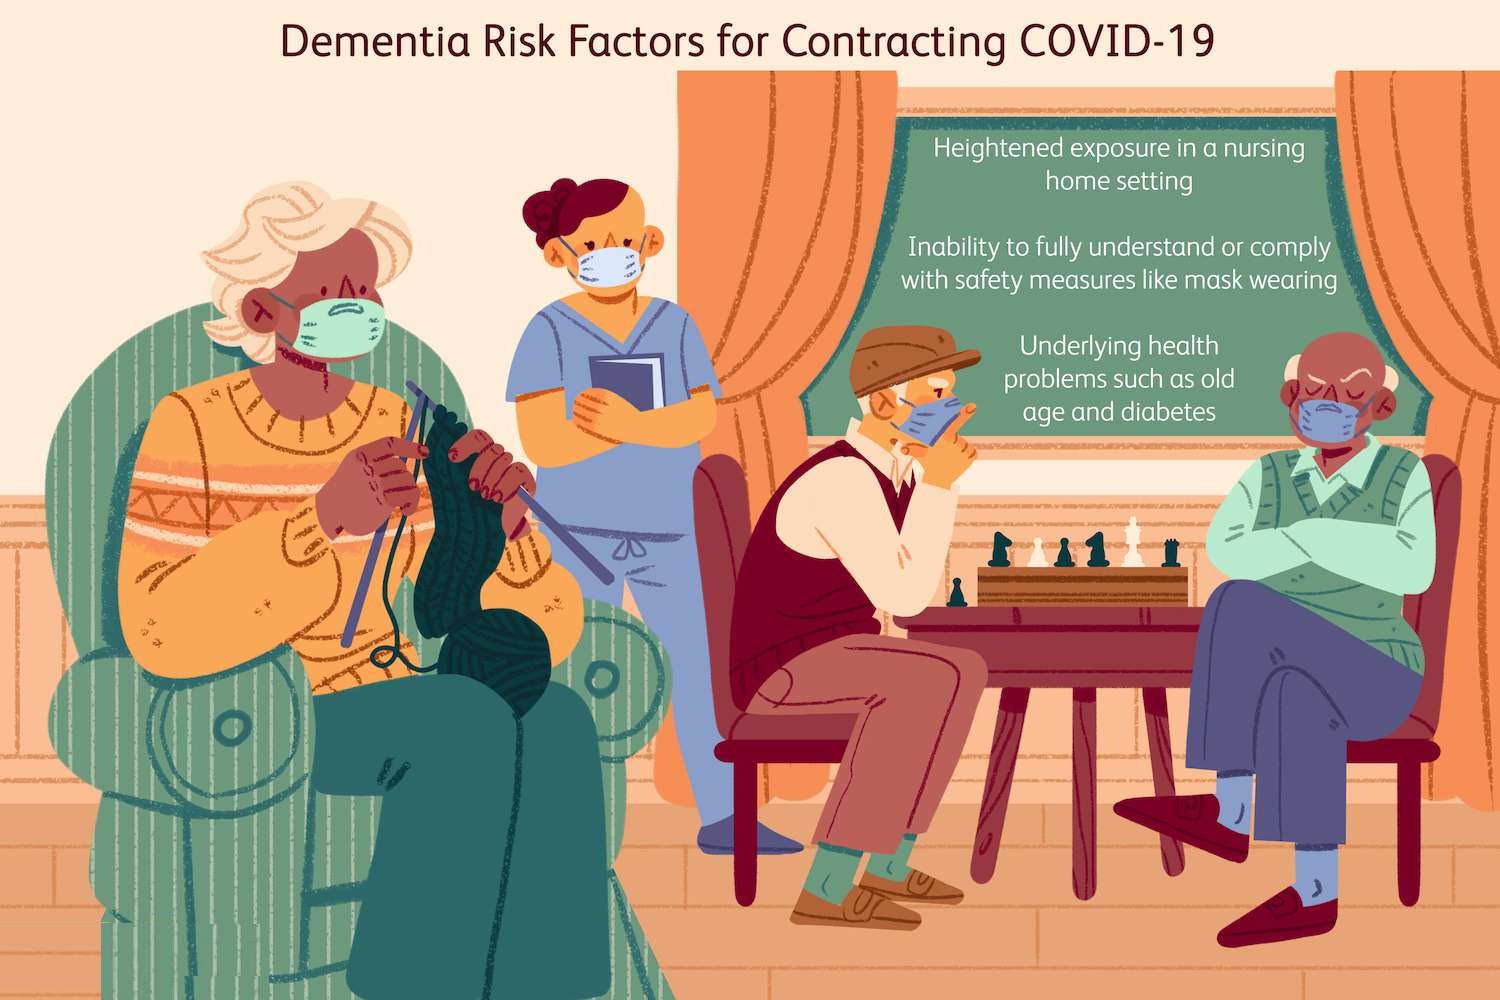 Dementia Risk Factors for Contracting COVID-19